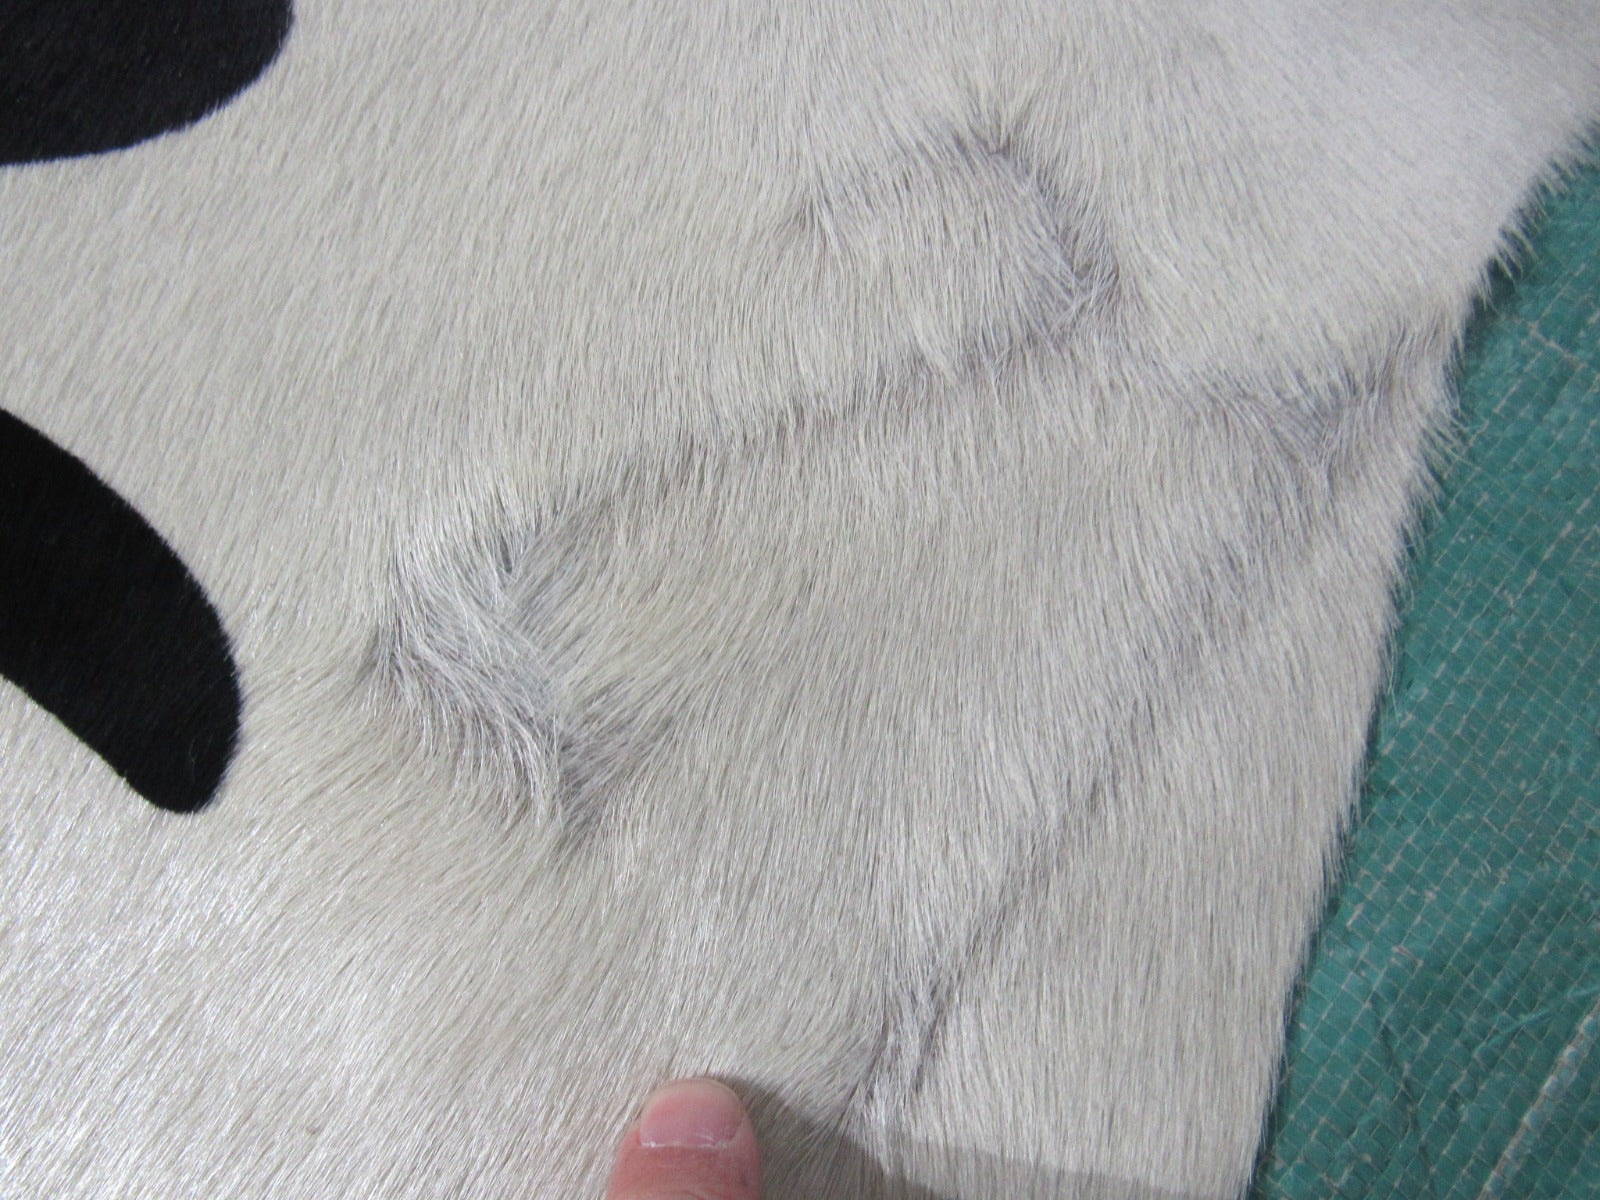 Gorgeous Zebra Print Cowhide Rug (Hair is super nice!/ fire brand) Size: 6.2x6 feet M-1431